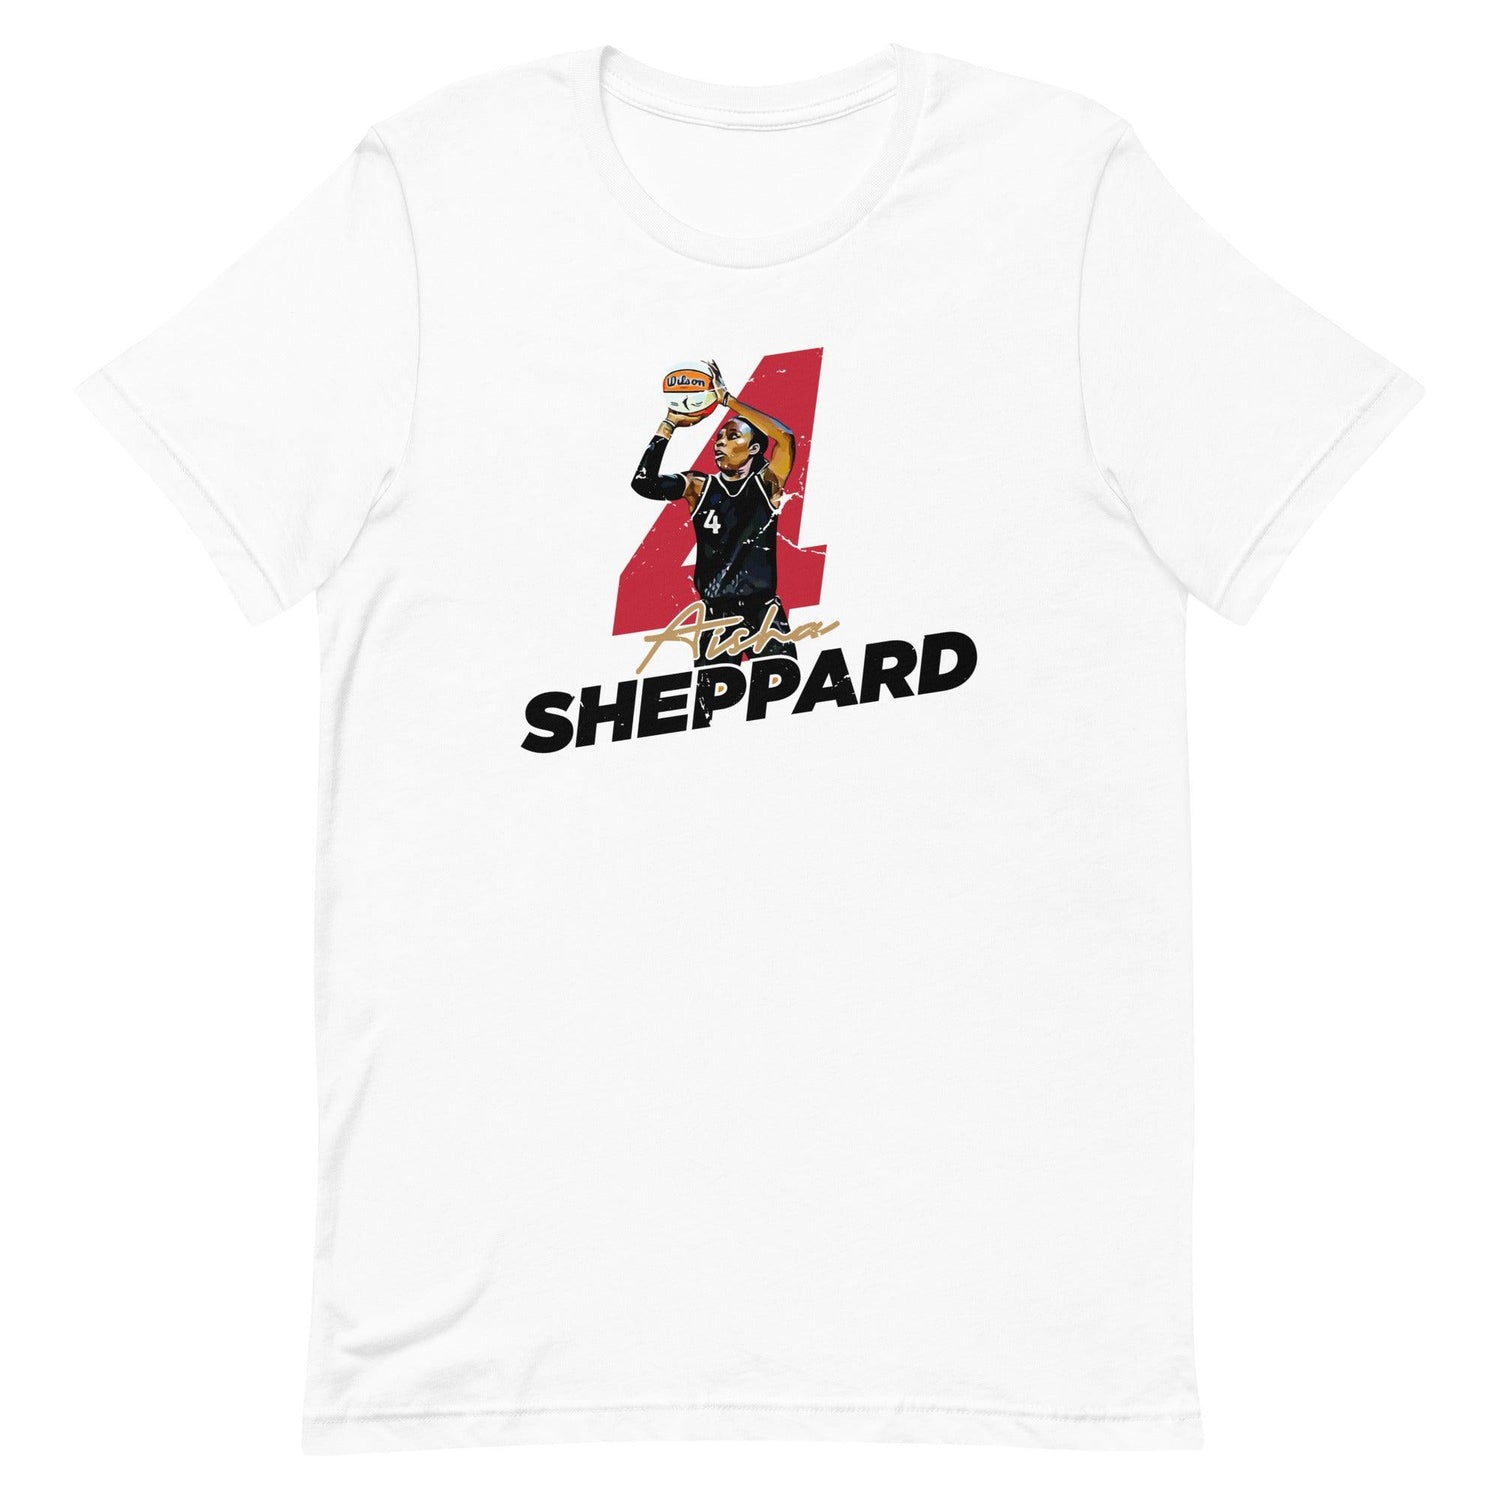 Aisha Sheppard "Pro Style" t-shirt - Fan Arch